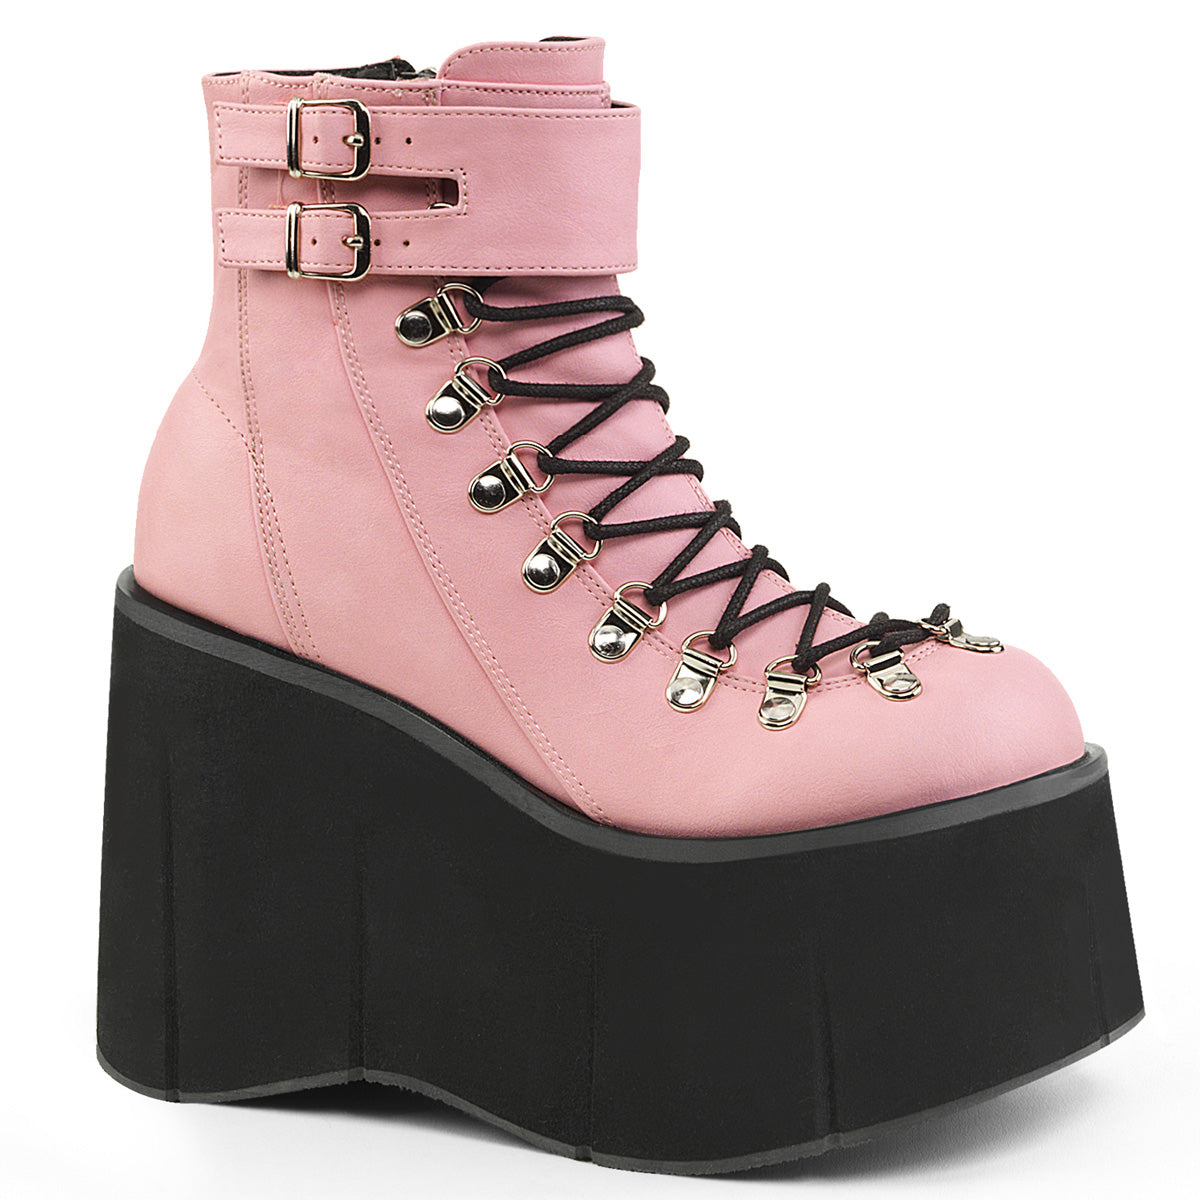 KERA-21 Alternative Footwear Demonia Women's Ankle Boots B. Pink Vegan Leather